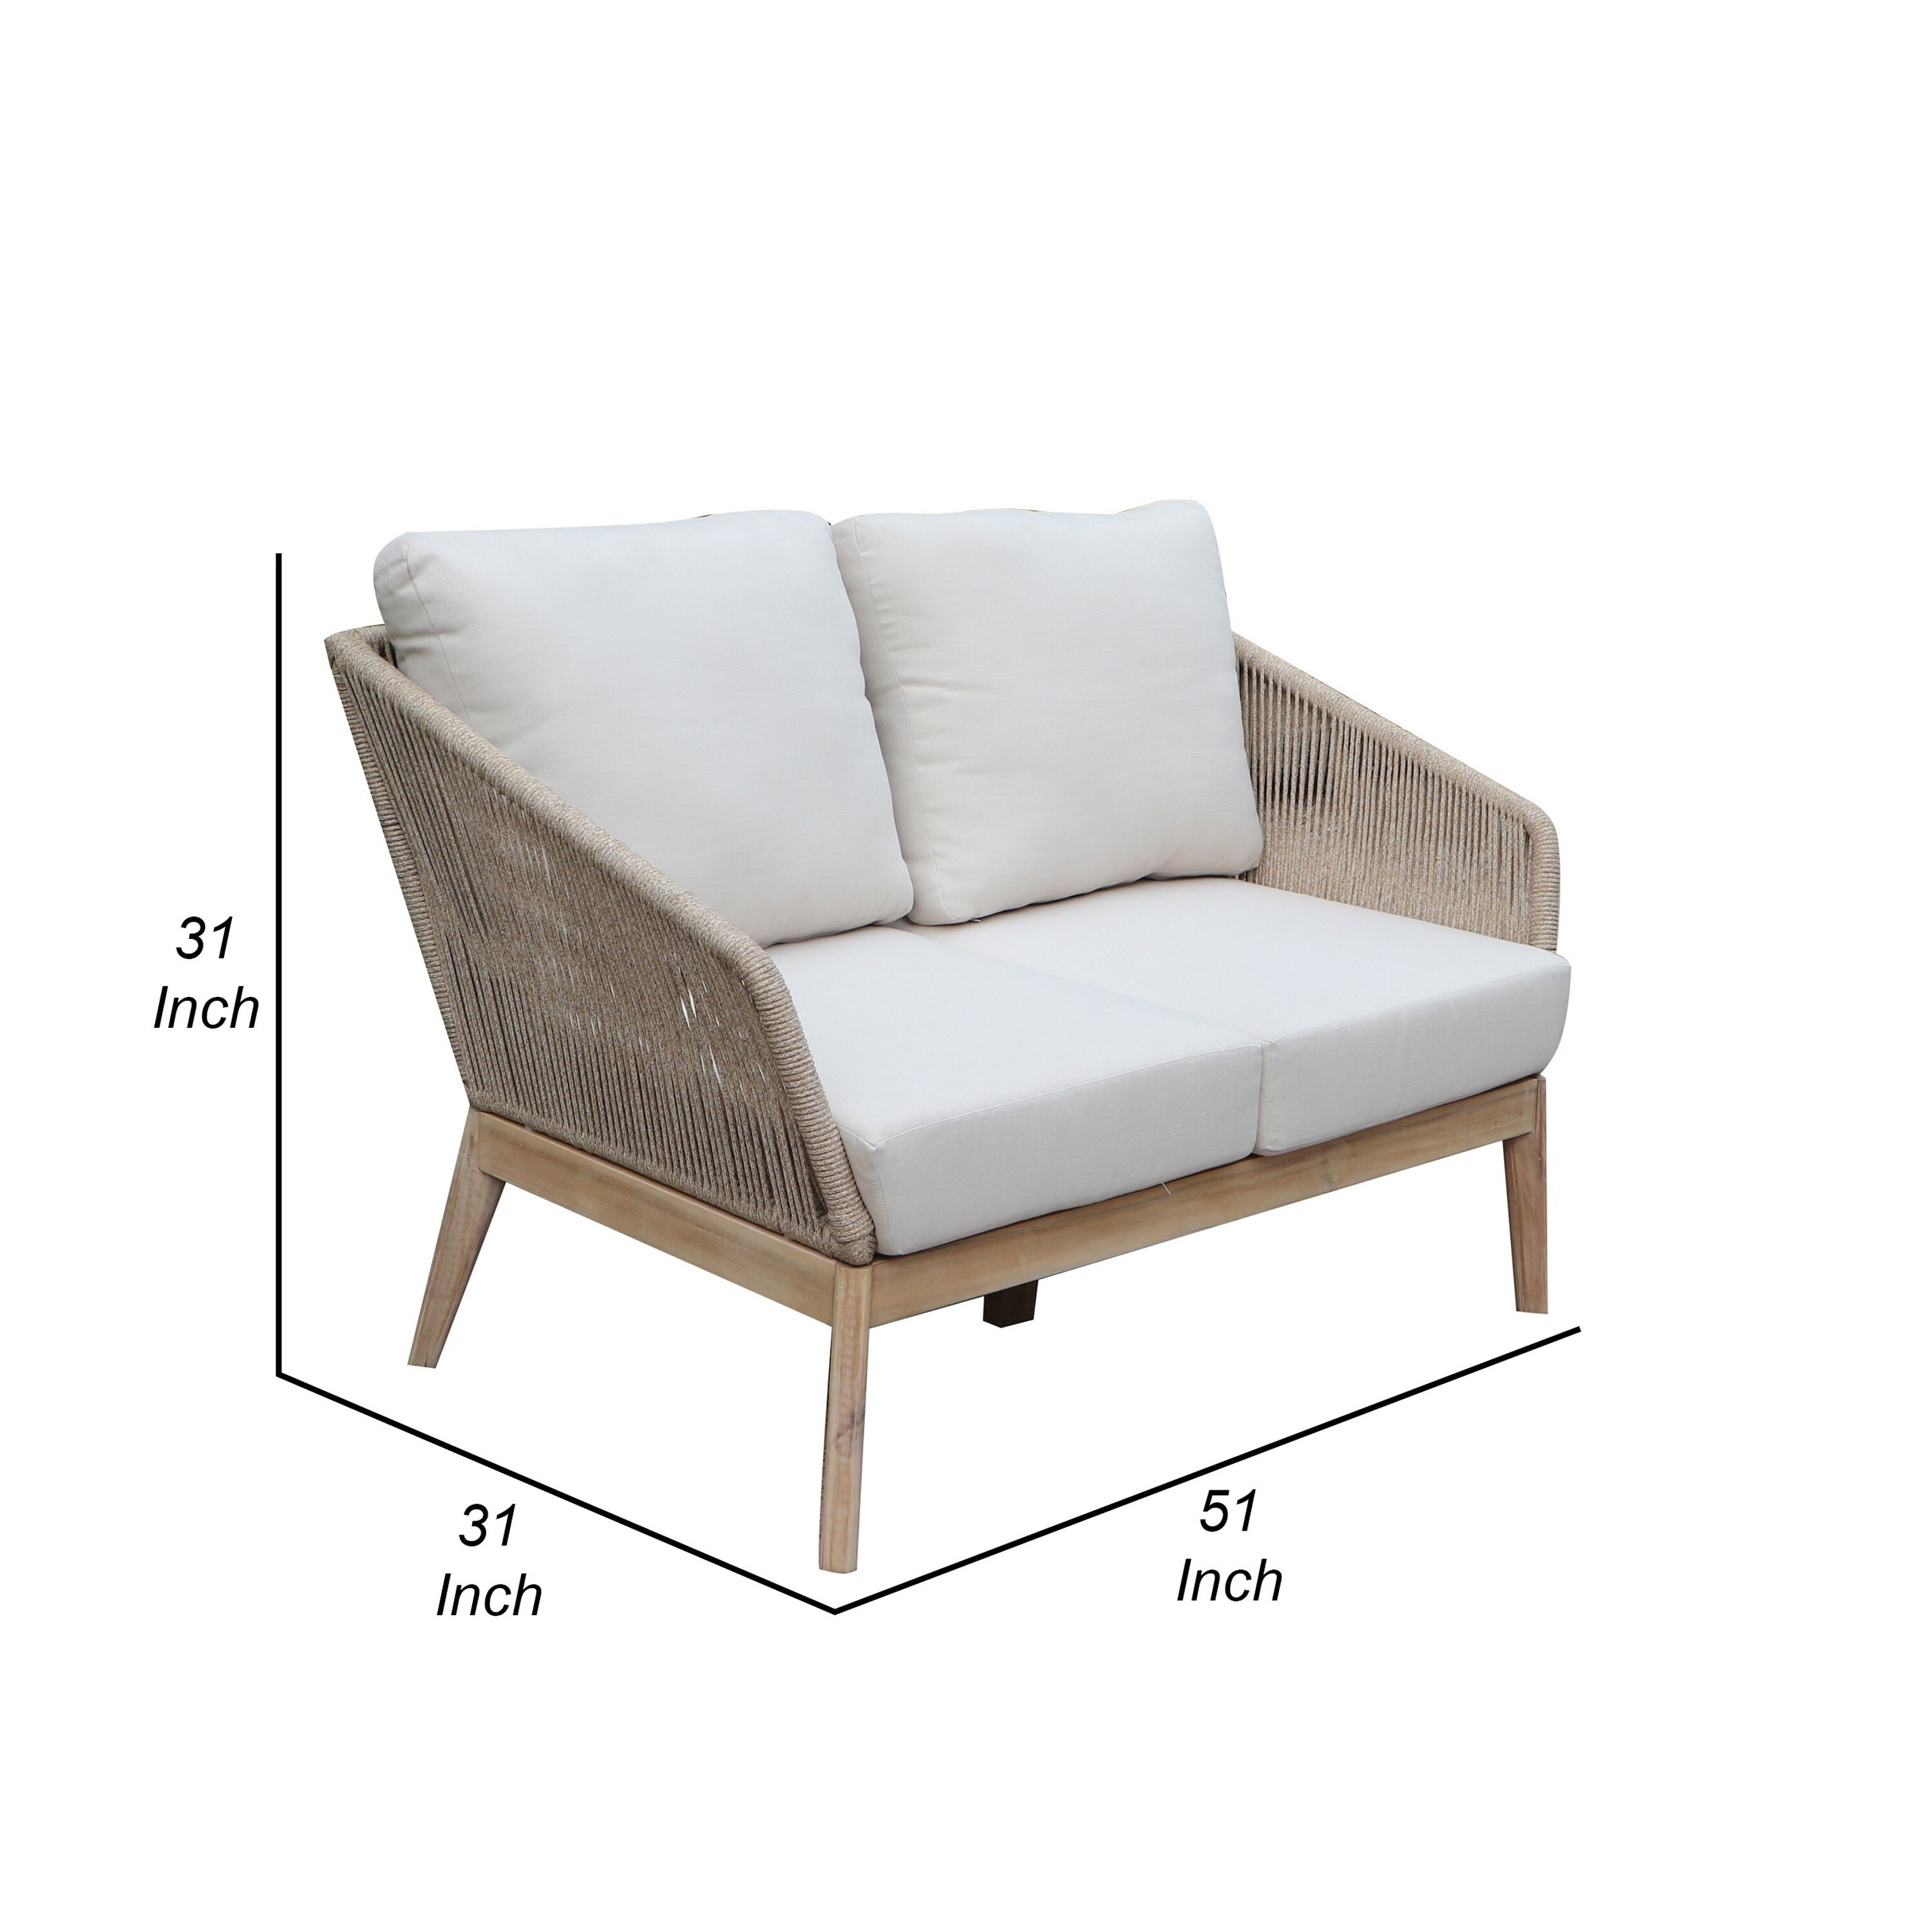 Dexi 51 Inch Patio Sofa, Fade Resistant Cushions, Rich Brown Acacia Wood